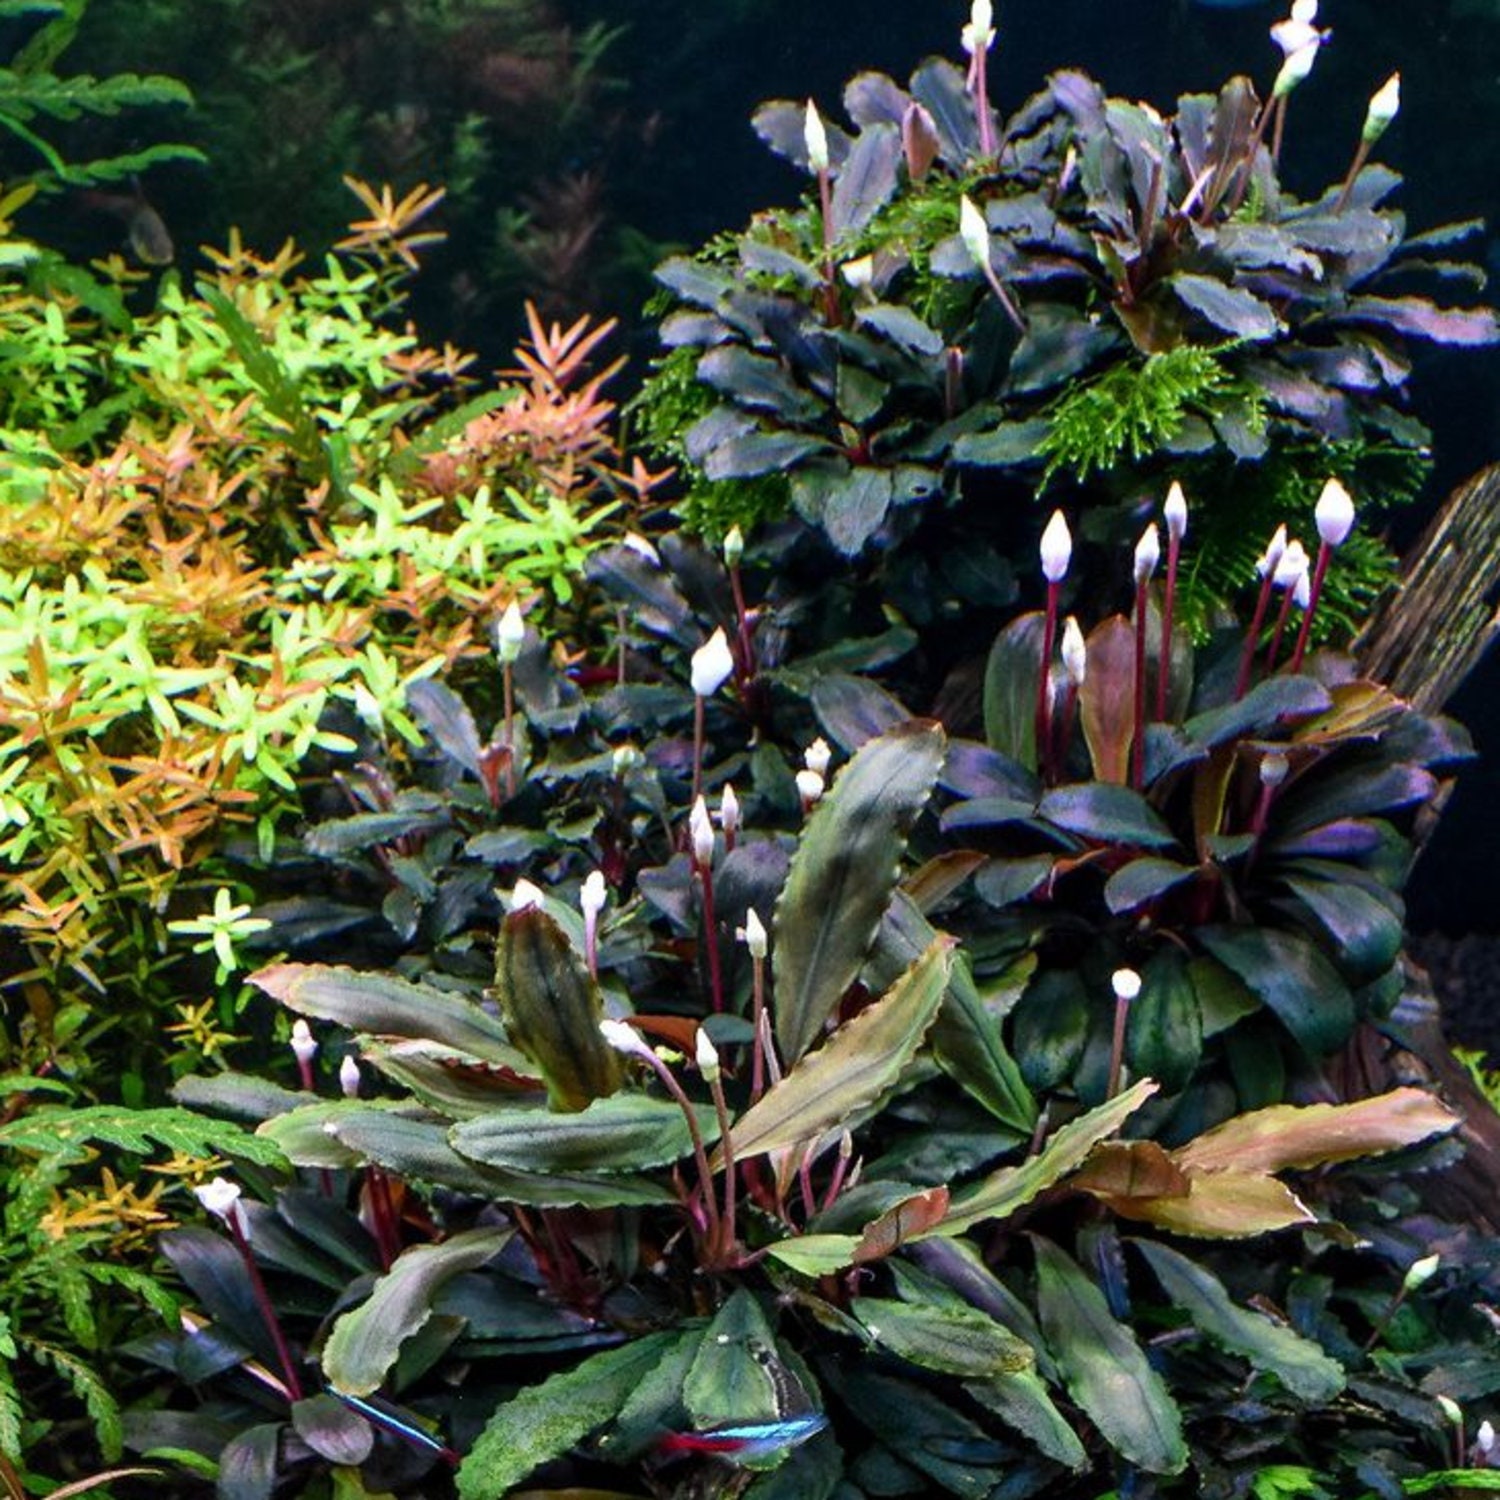 Live Moss Small Terrarium Plants Bonsai, Miniature Garden Plants